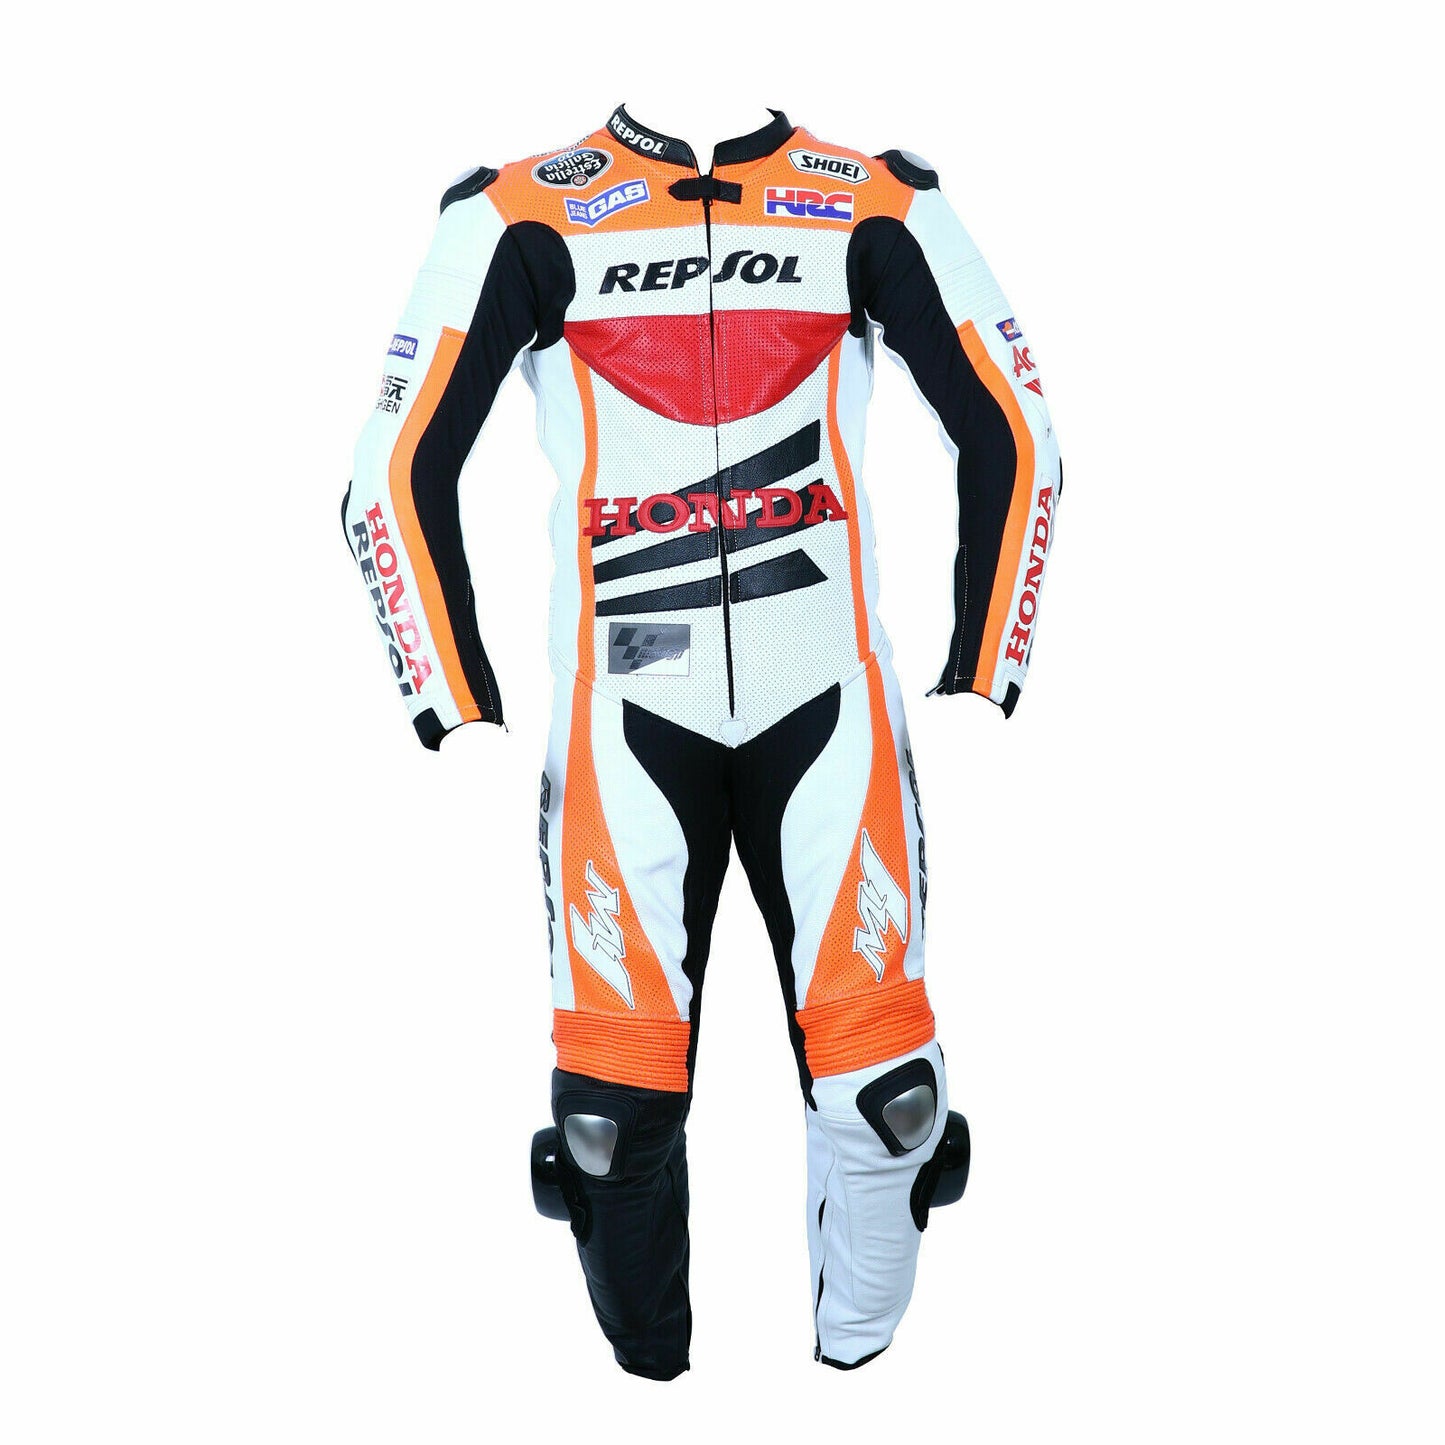 Honda Repsol Race Suit - OHR02